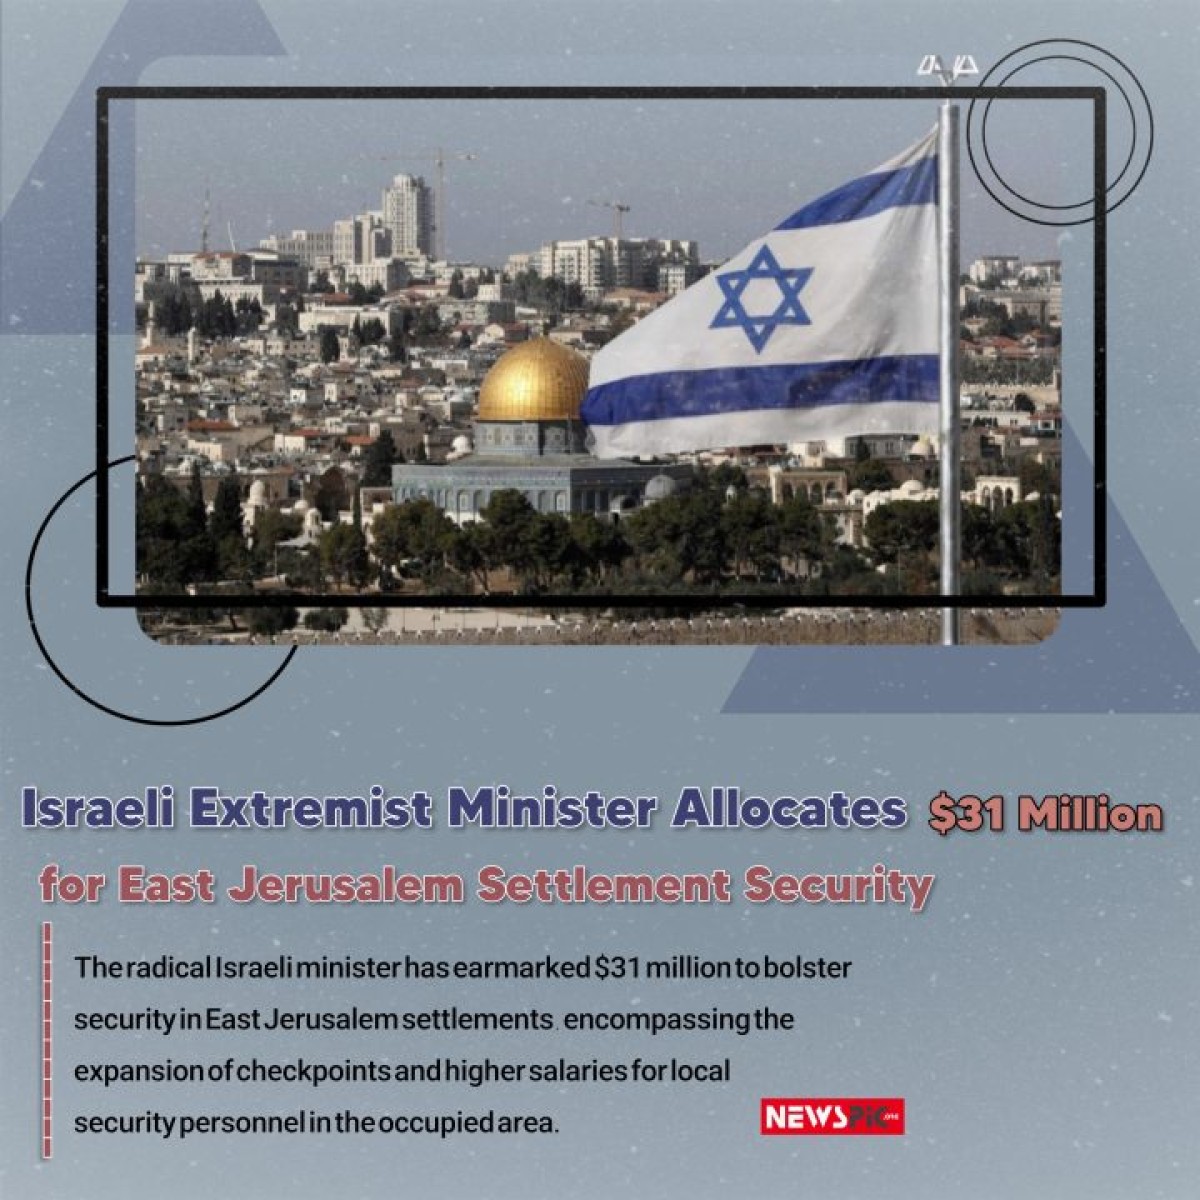 ISRAELI EXTREMISTMINISTER ALLOCATES $31 MILLION FOR EAST JERUSALEM SETTLEMENT SECURITY